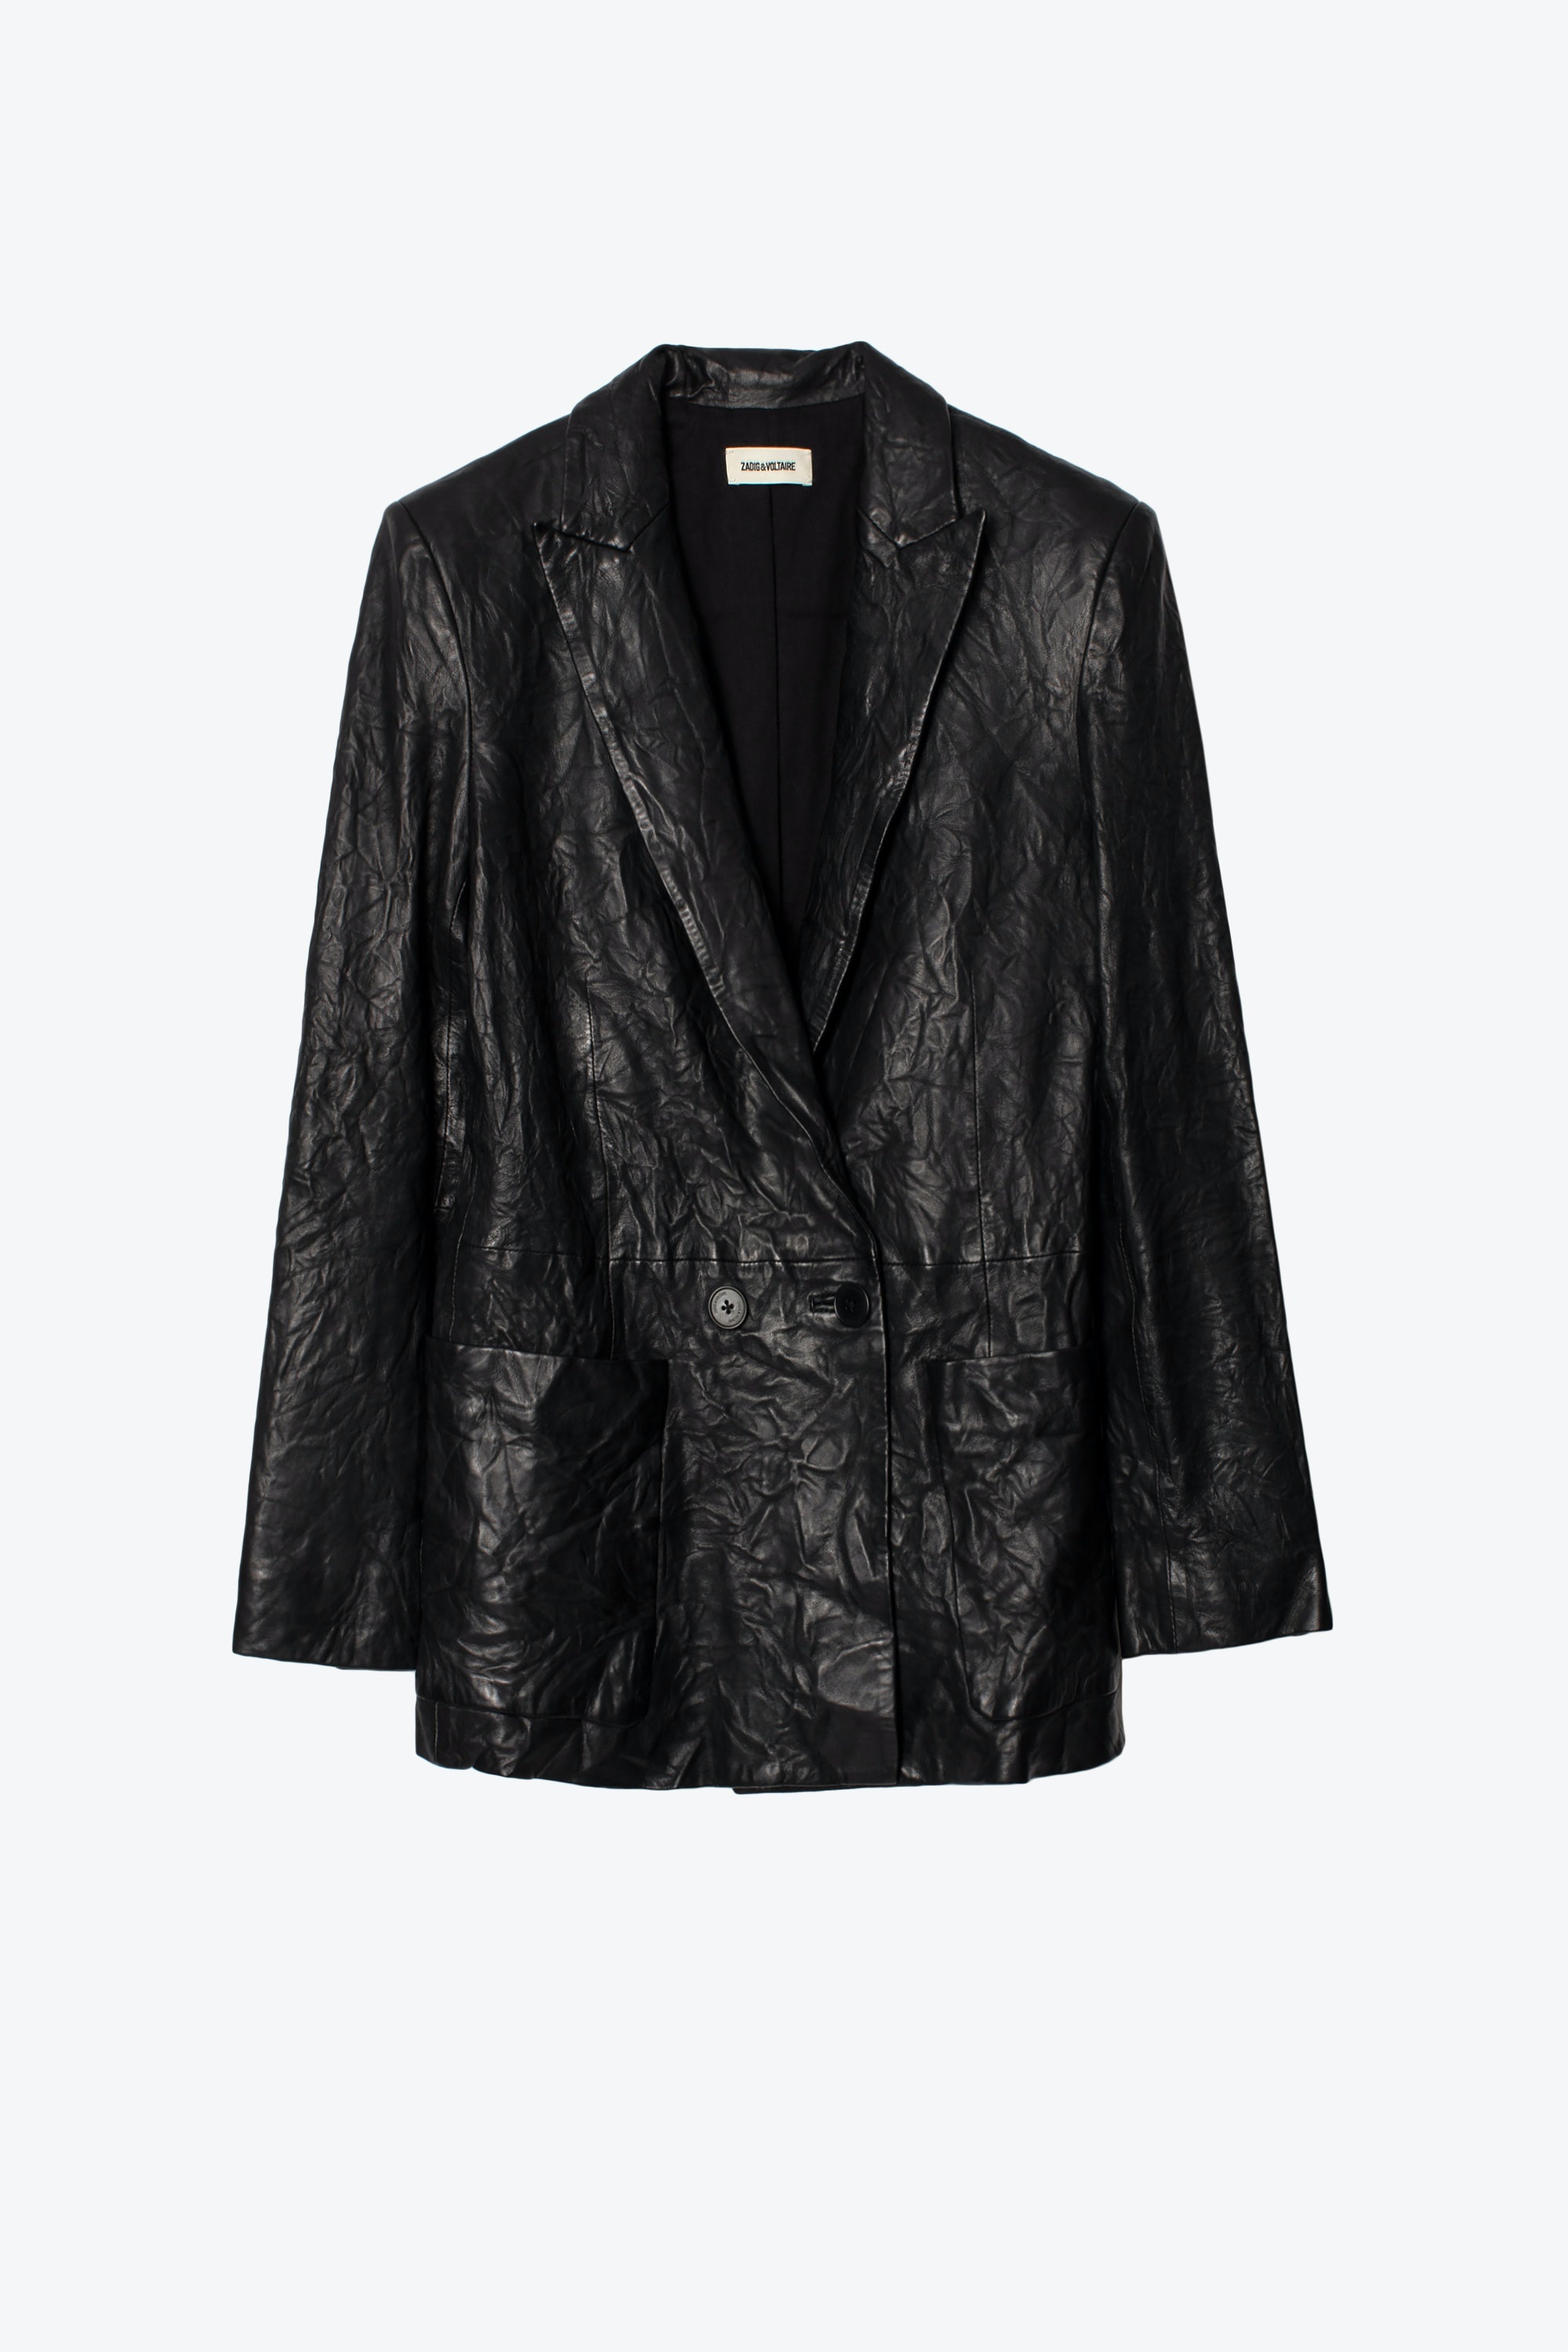 Visco Crinkled Leather Jacket - 1